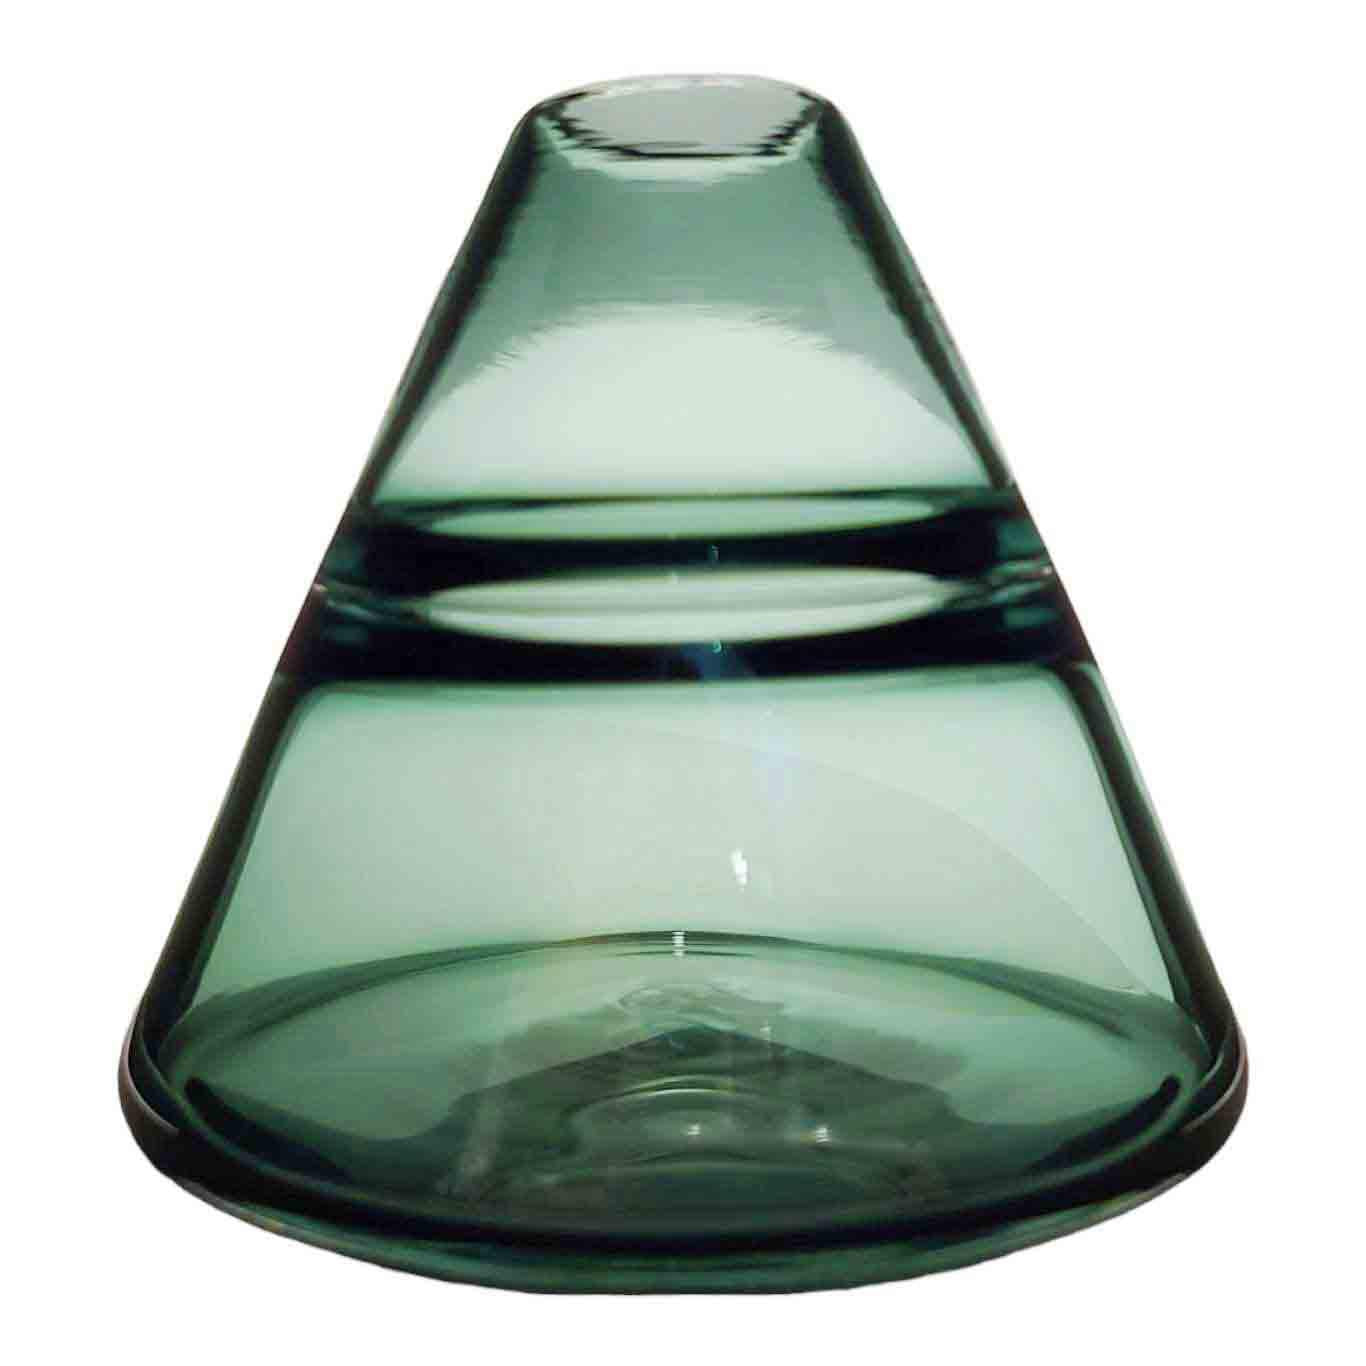 Bud Vase - Medium Cone in Stormy Sea Dark Teal Glass by Dougherty Glassworks